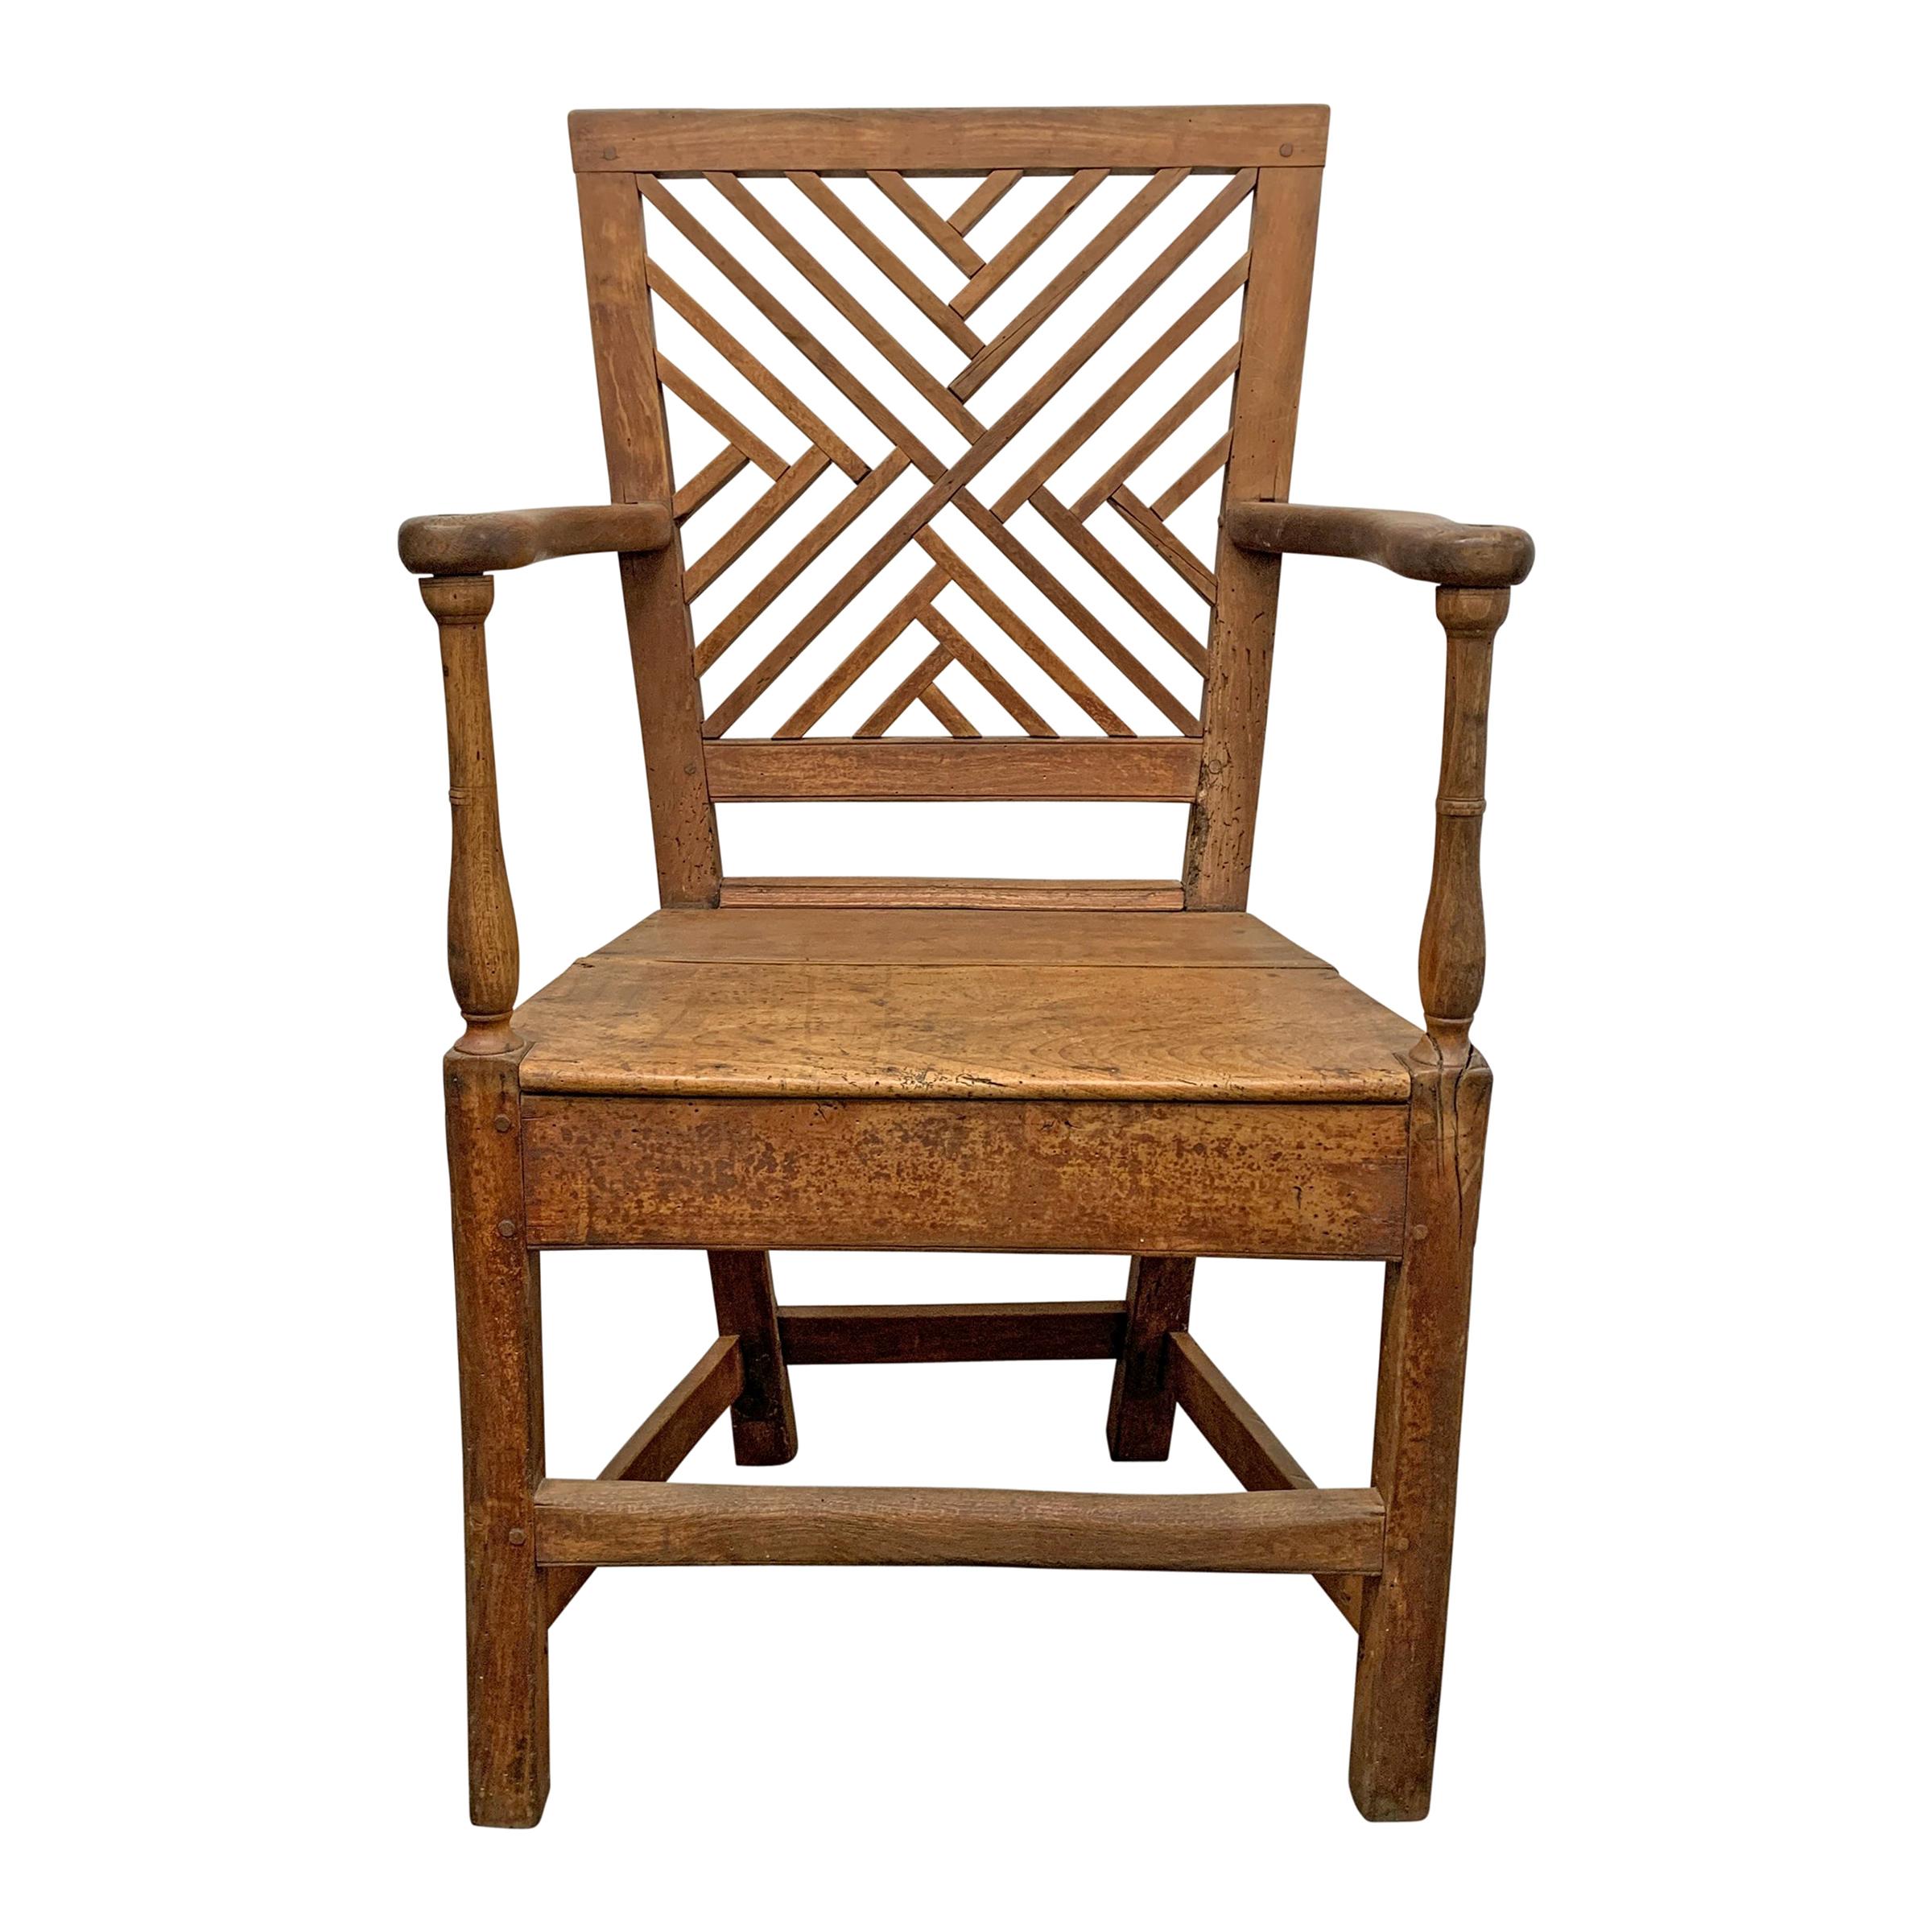 19th Century English Lattice-Back Armchair